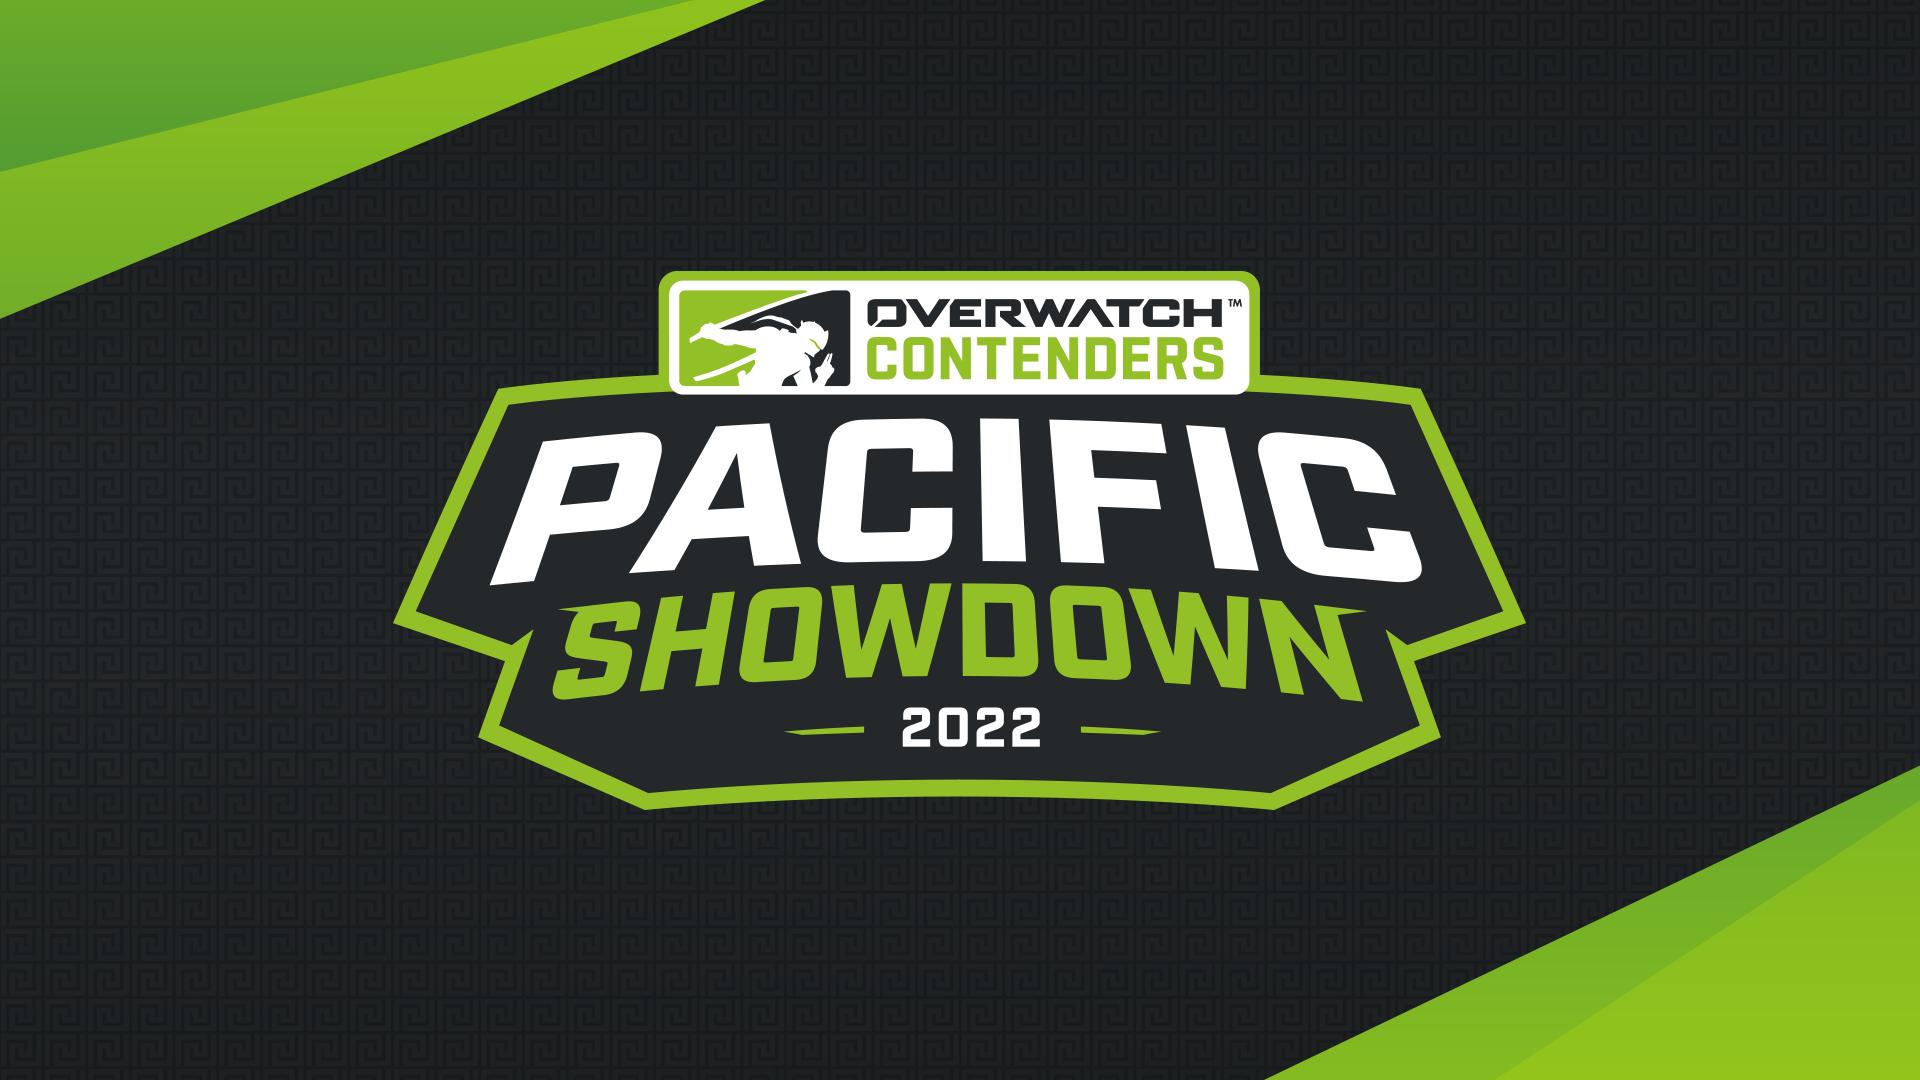 Overwatch Contenders Pacific Showdownの見出し画像